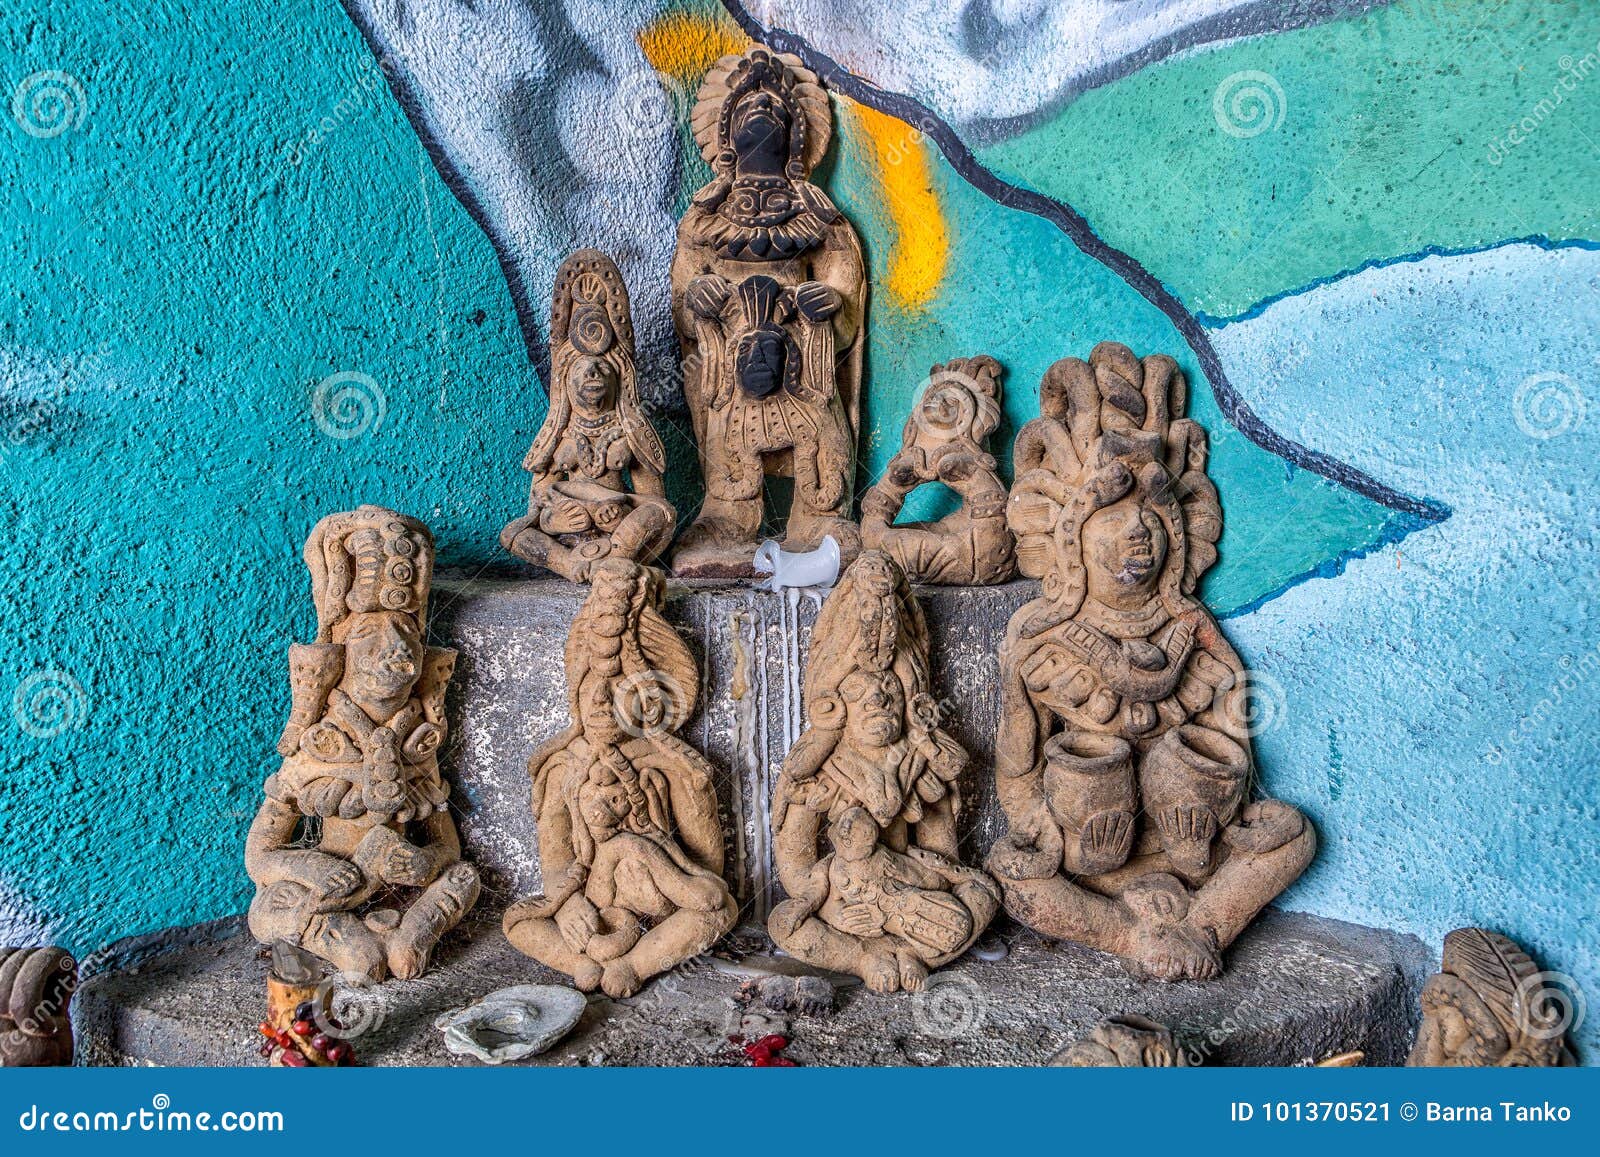 maya-statue-closeup-guatemala-february-san-pedro-la-laguna-guatemala-illustrative-editorial-closeup-antique-statues-101370521.jpg